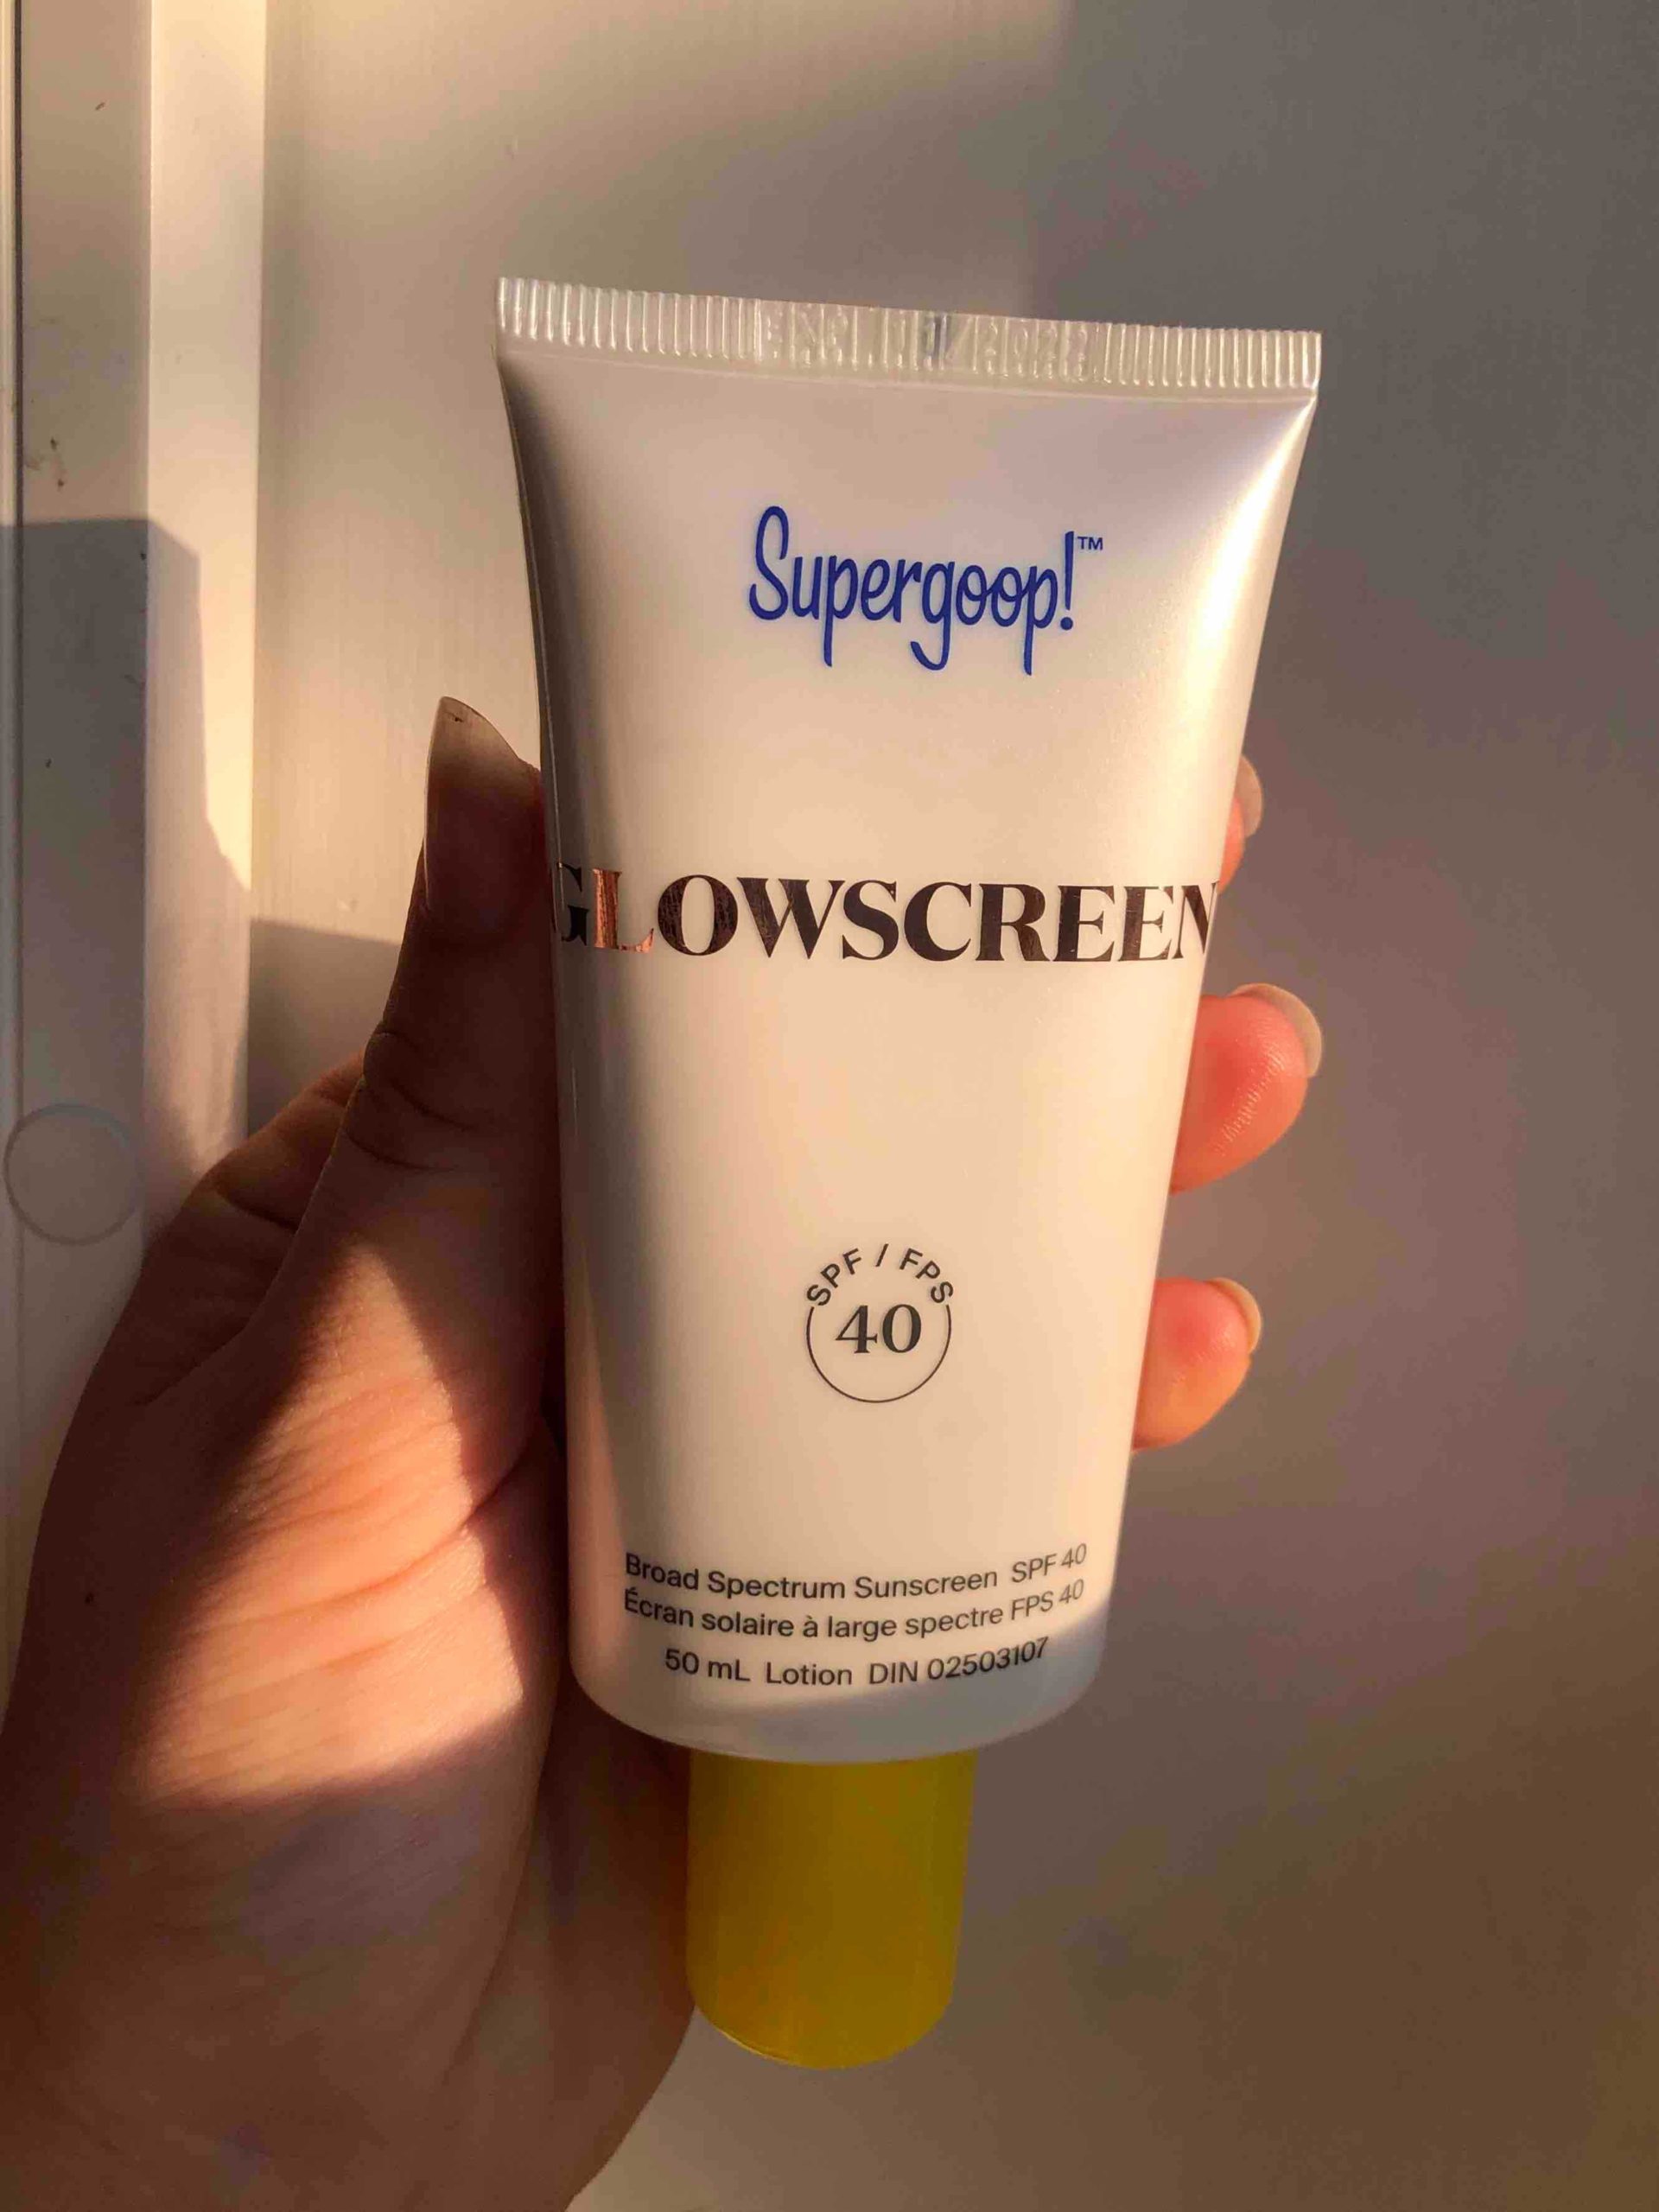 Supergoop! Glowscreen